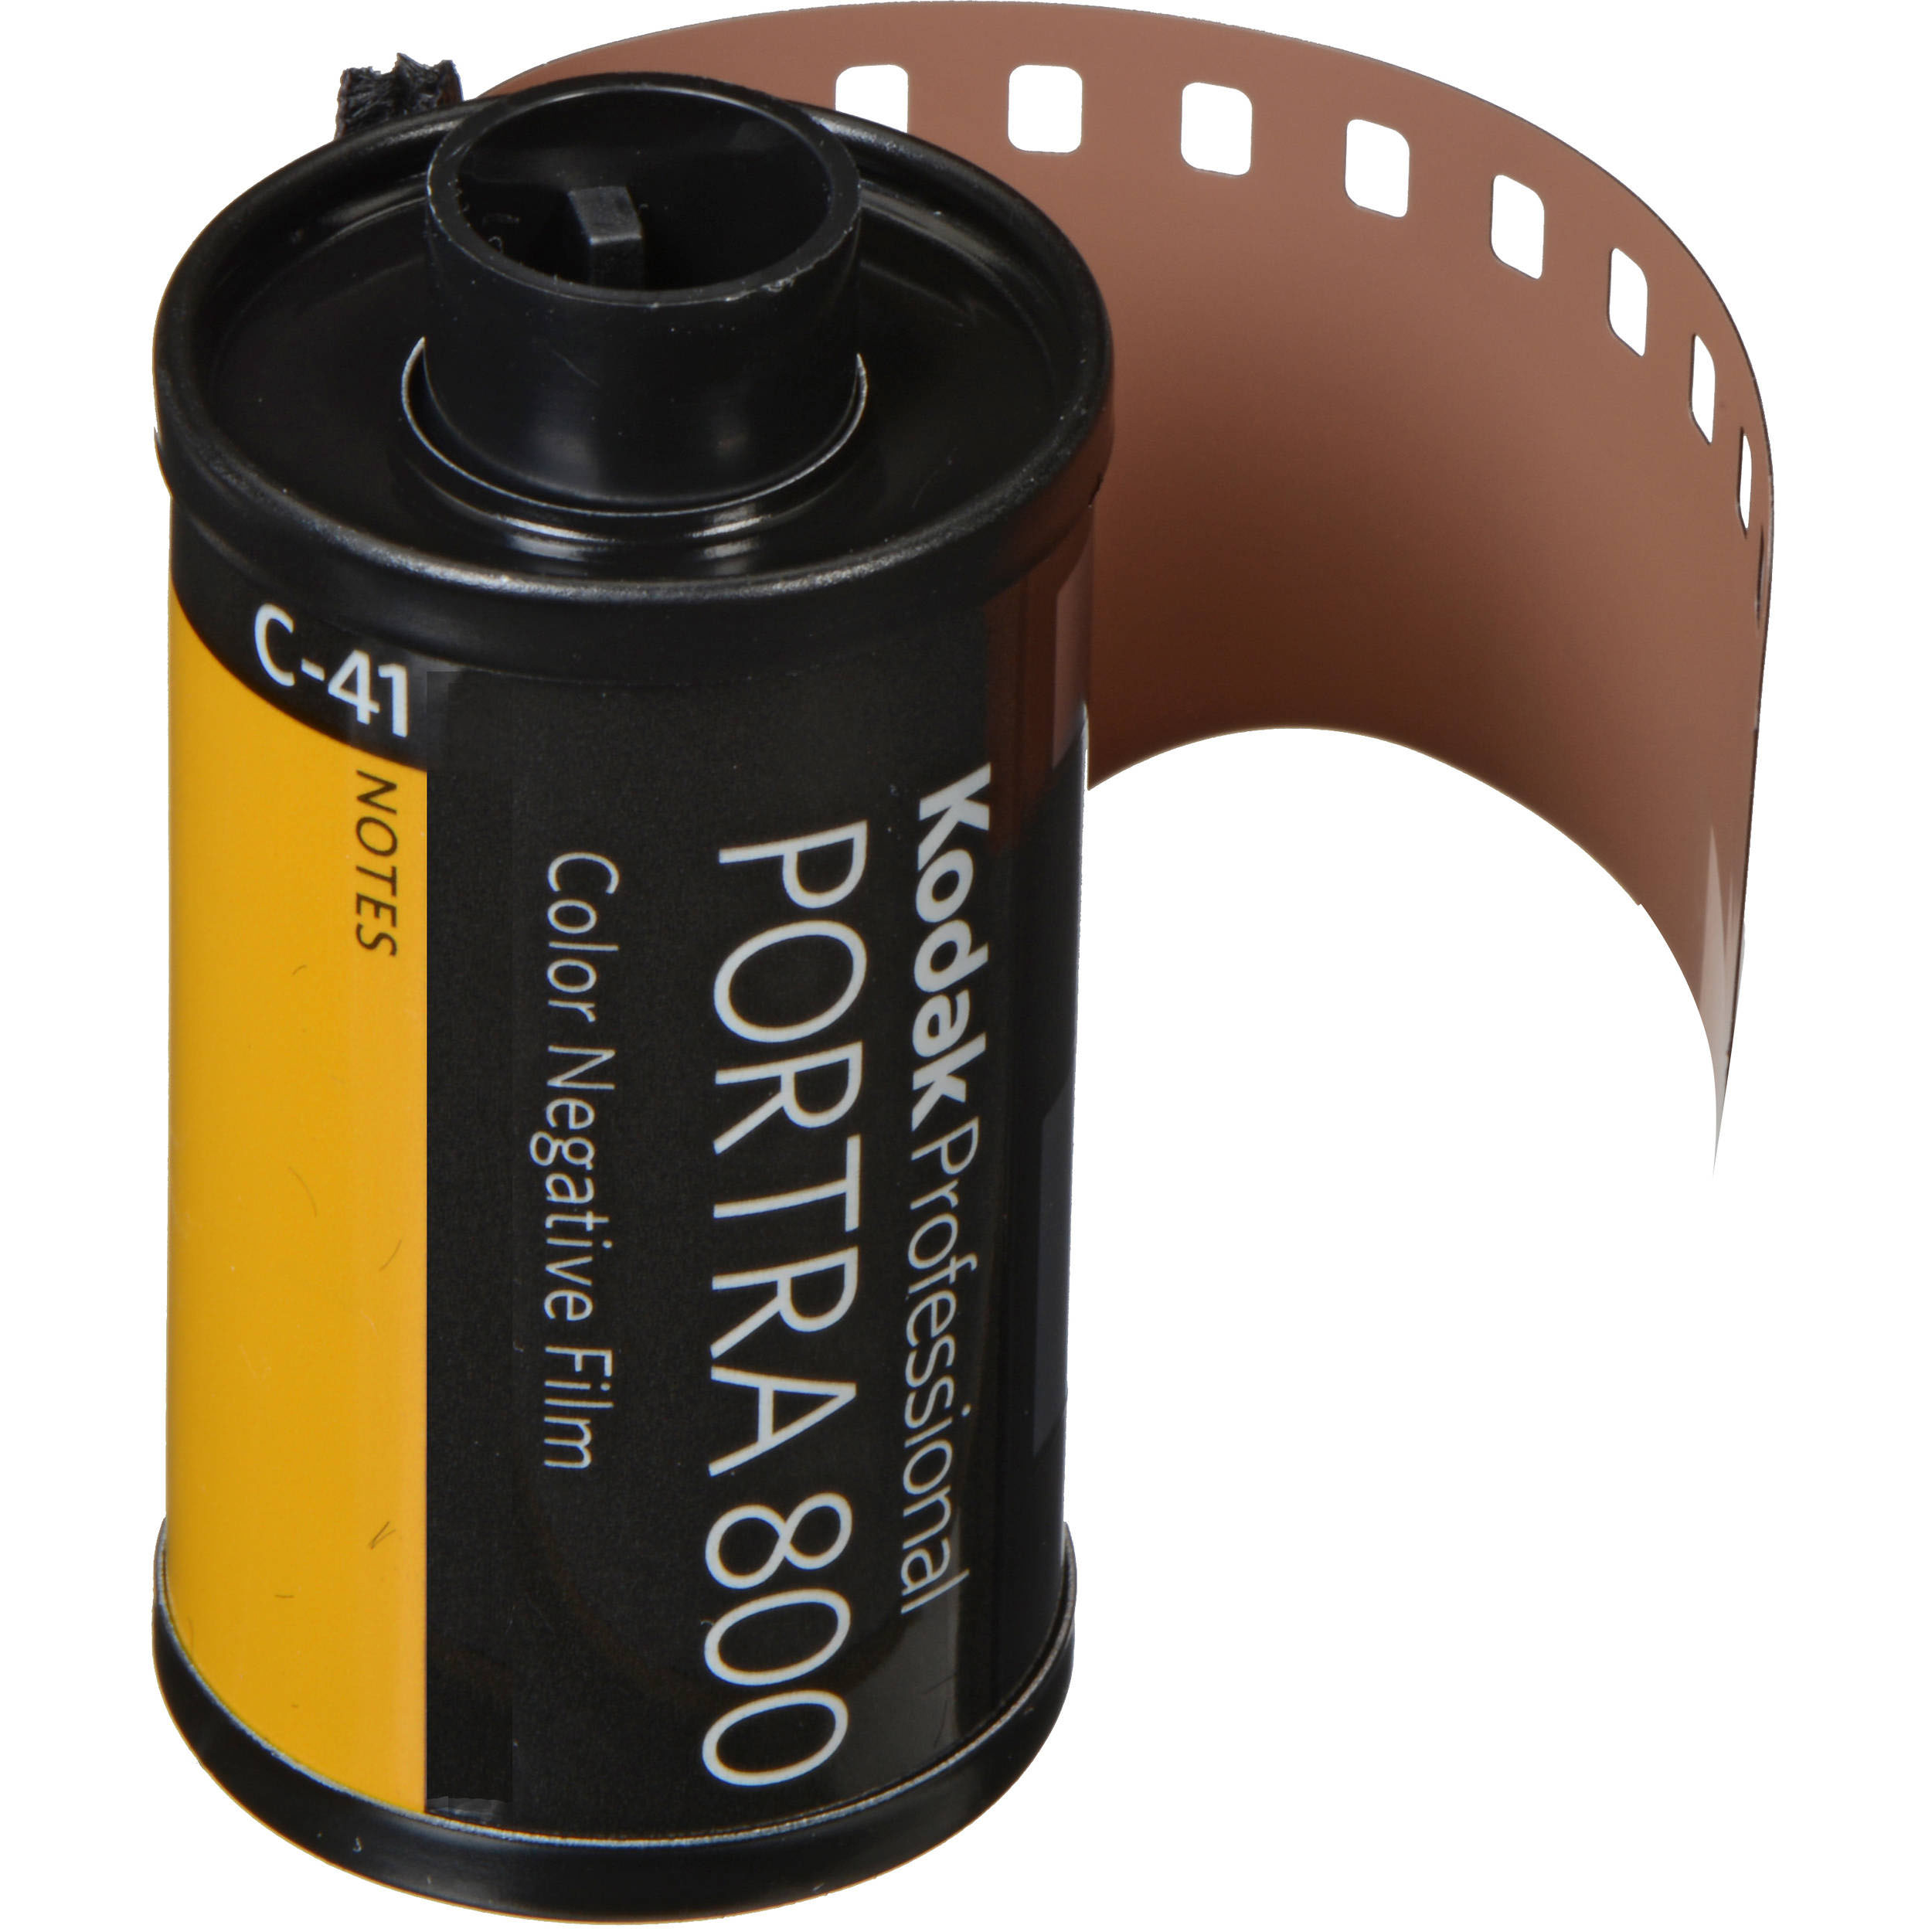 Kodak professional negative film portra ISO 800